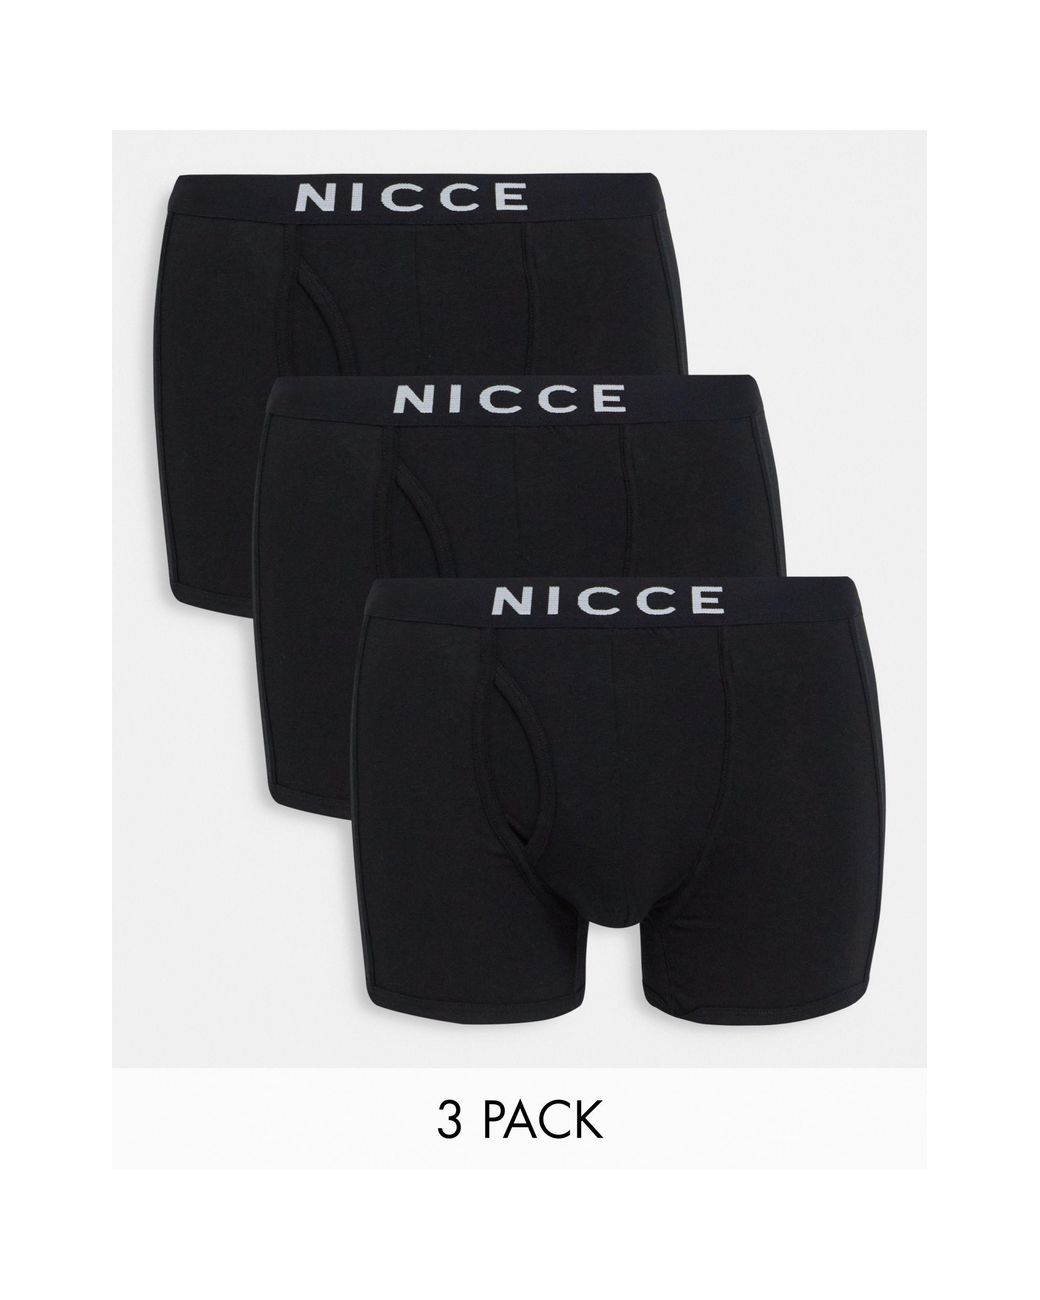 Nicce London Cubar 3 Pack Trunks in Black for Men - Lyst